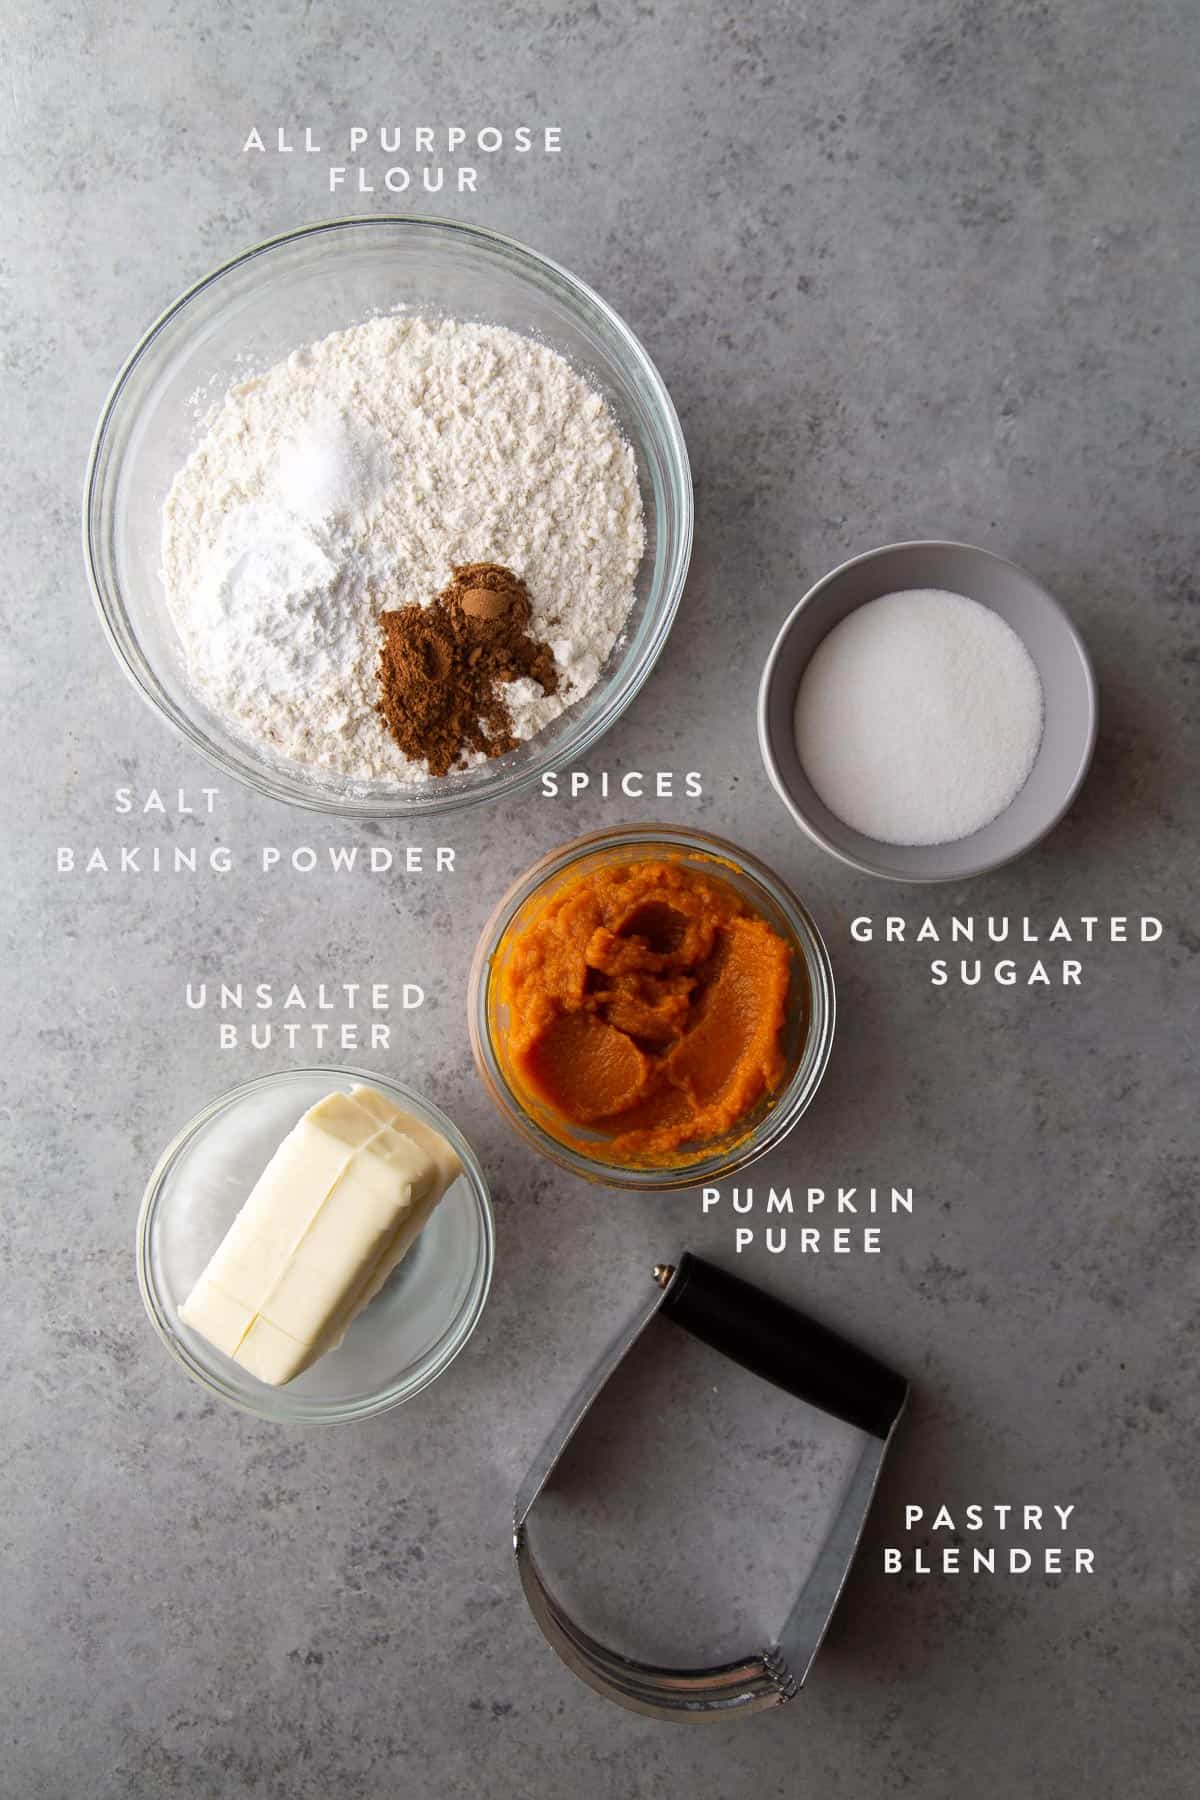 pumpkin scone ingredients including pumpkin puree, butter, sugar, and flour.